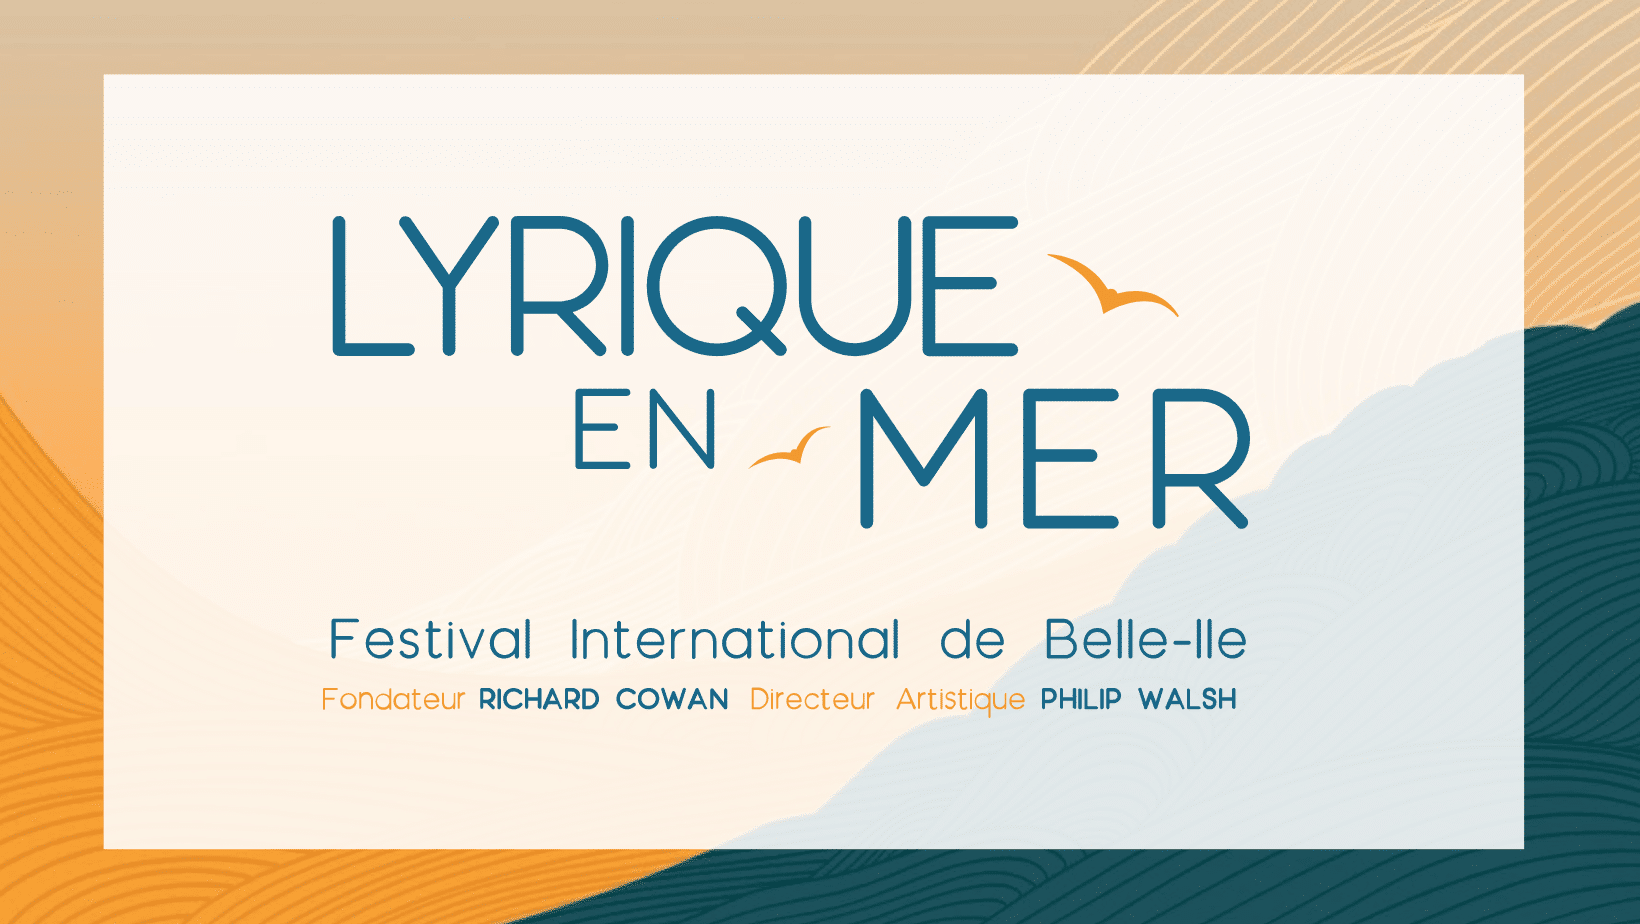 Festival Lyrique en mer de Belle-Ile en Mer, du 26 juillet au 12 août 2023